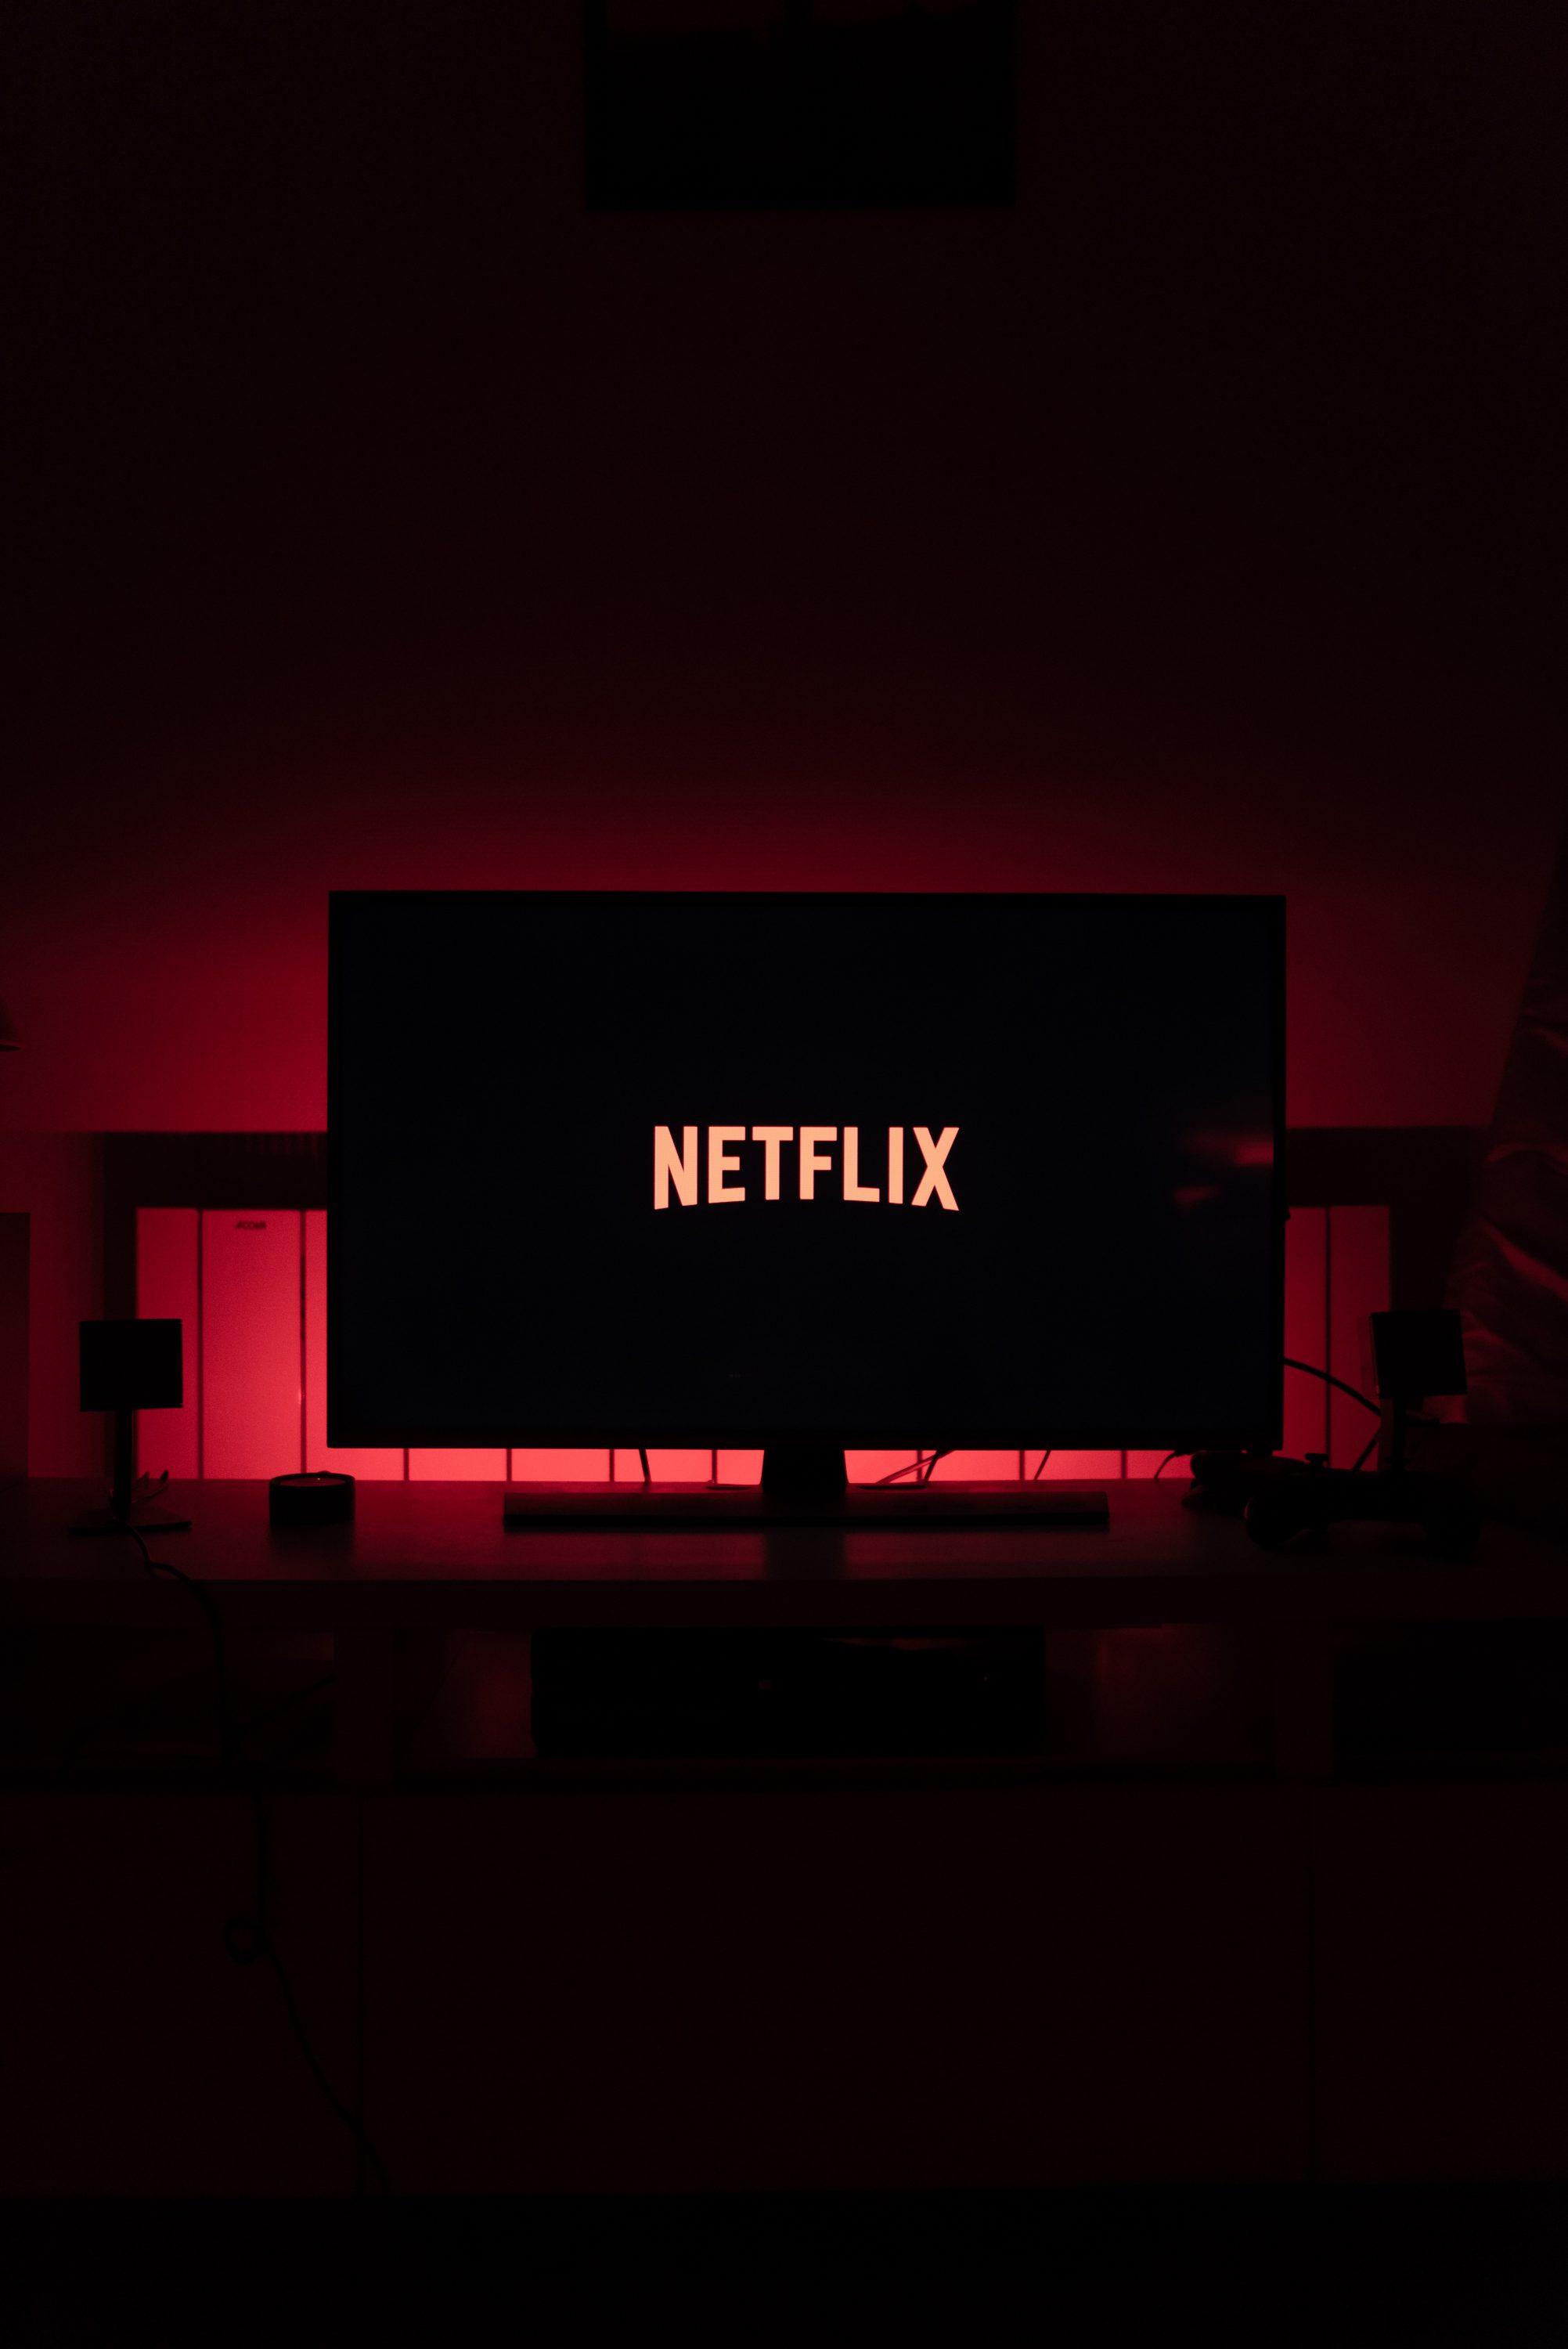 Nwtflix Logo - Netflix Logo on TV Free Stock Photo | Stock Photo Bucket